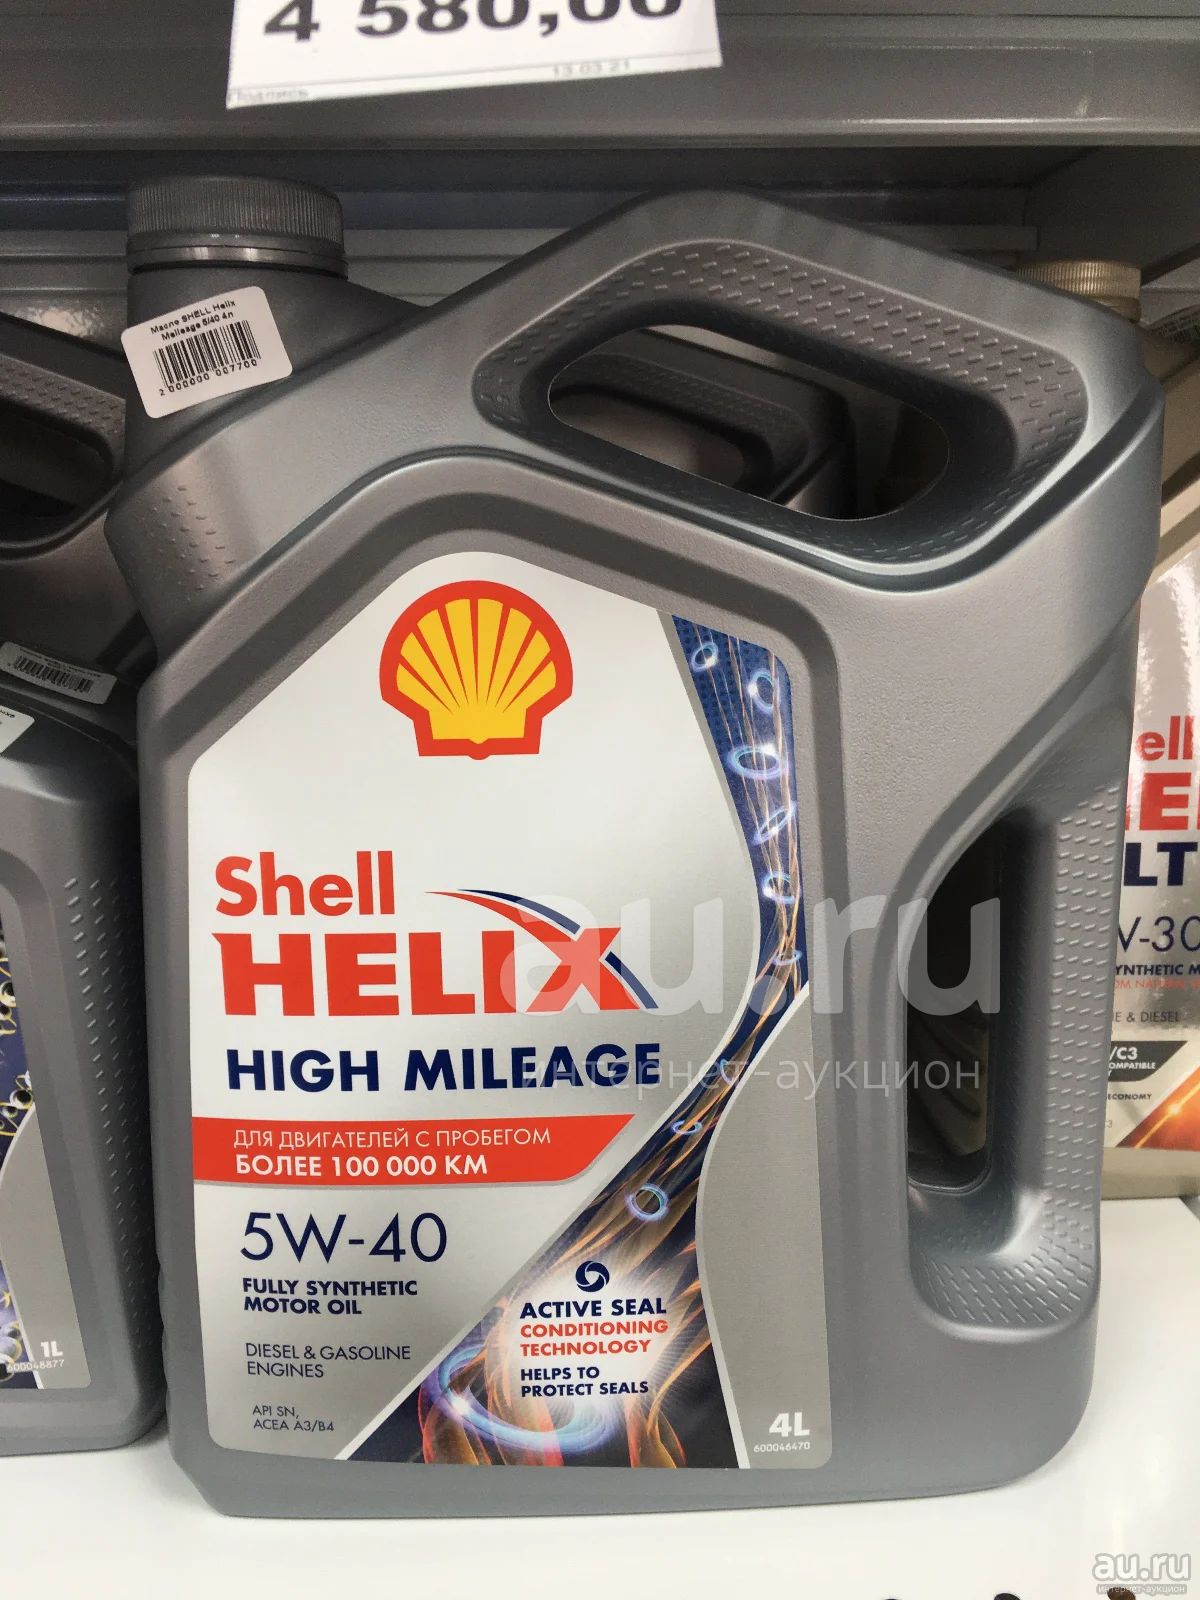 Shell helix high mileage. Shell Helix Mileage.